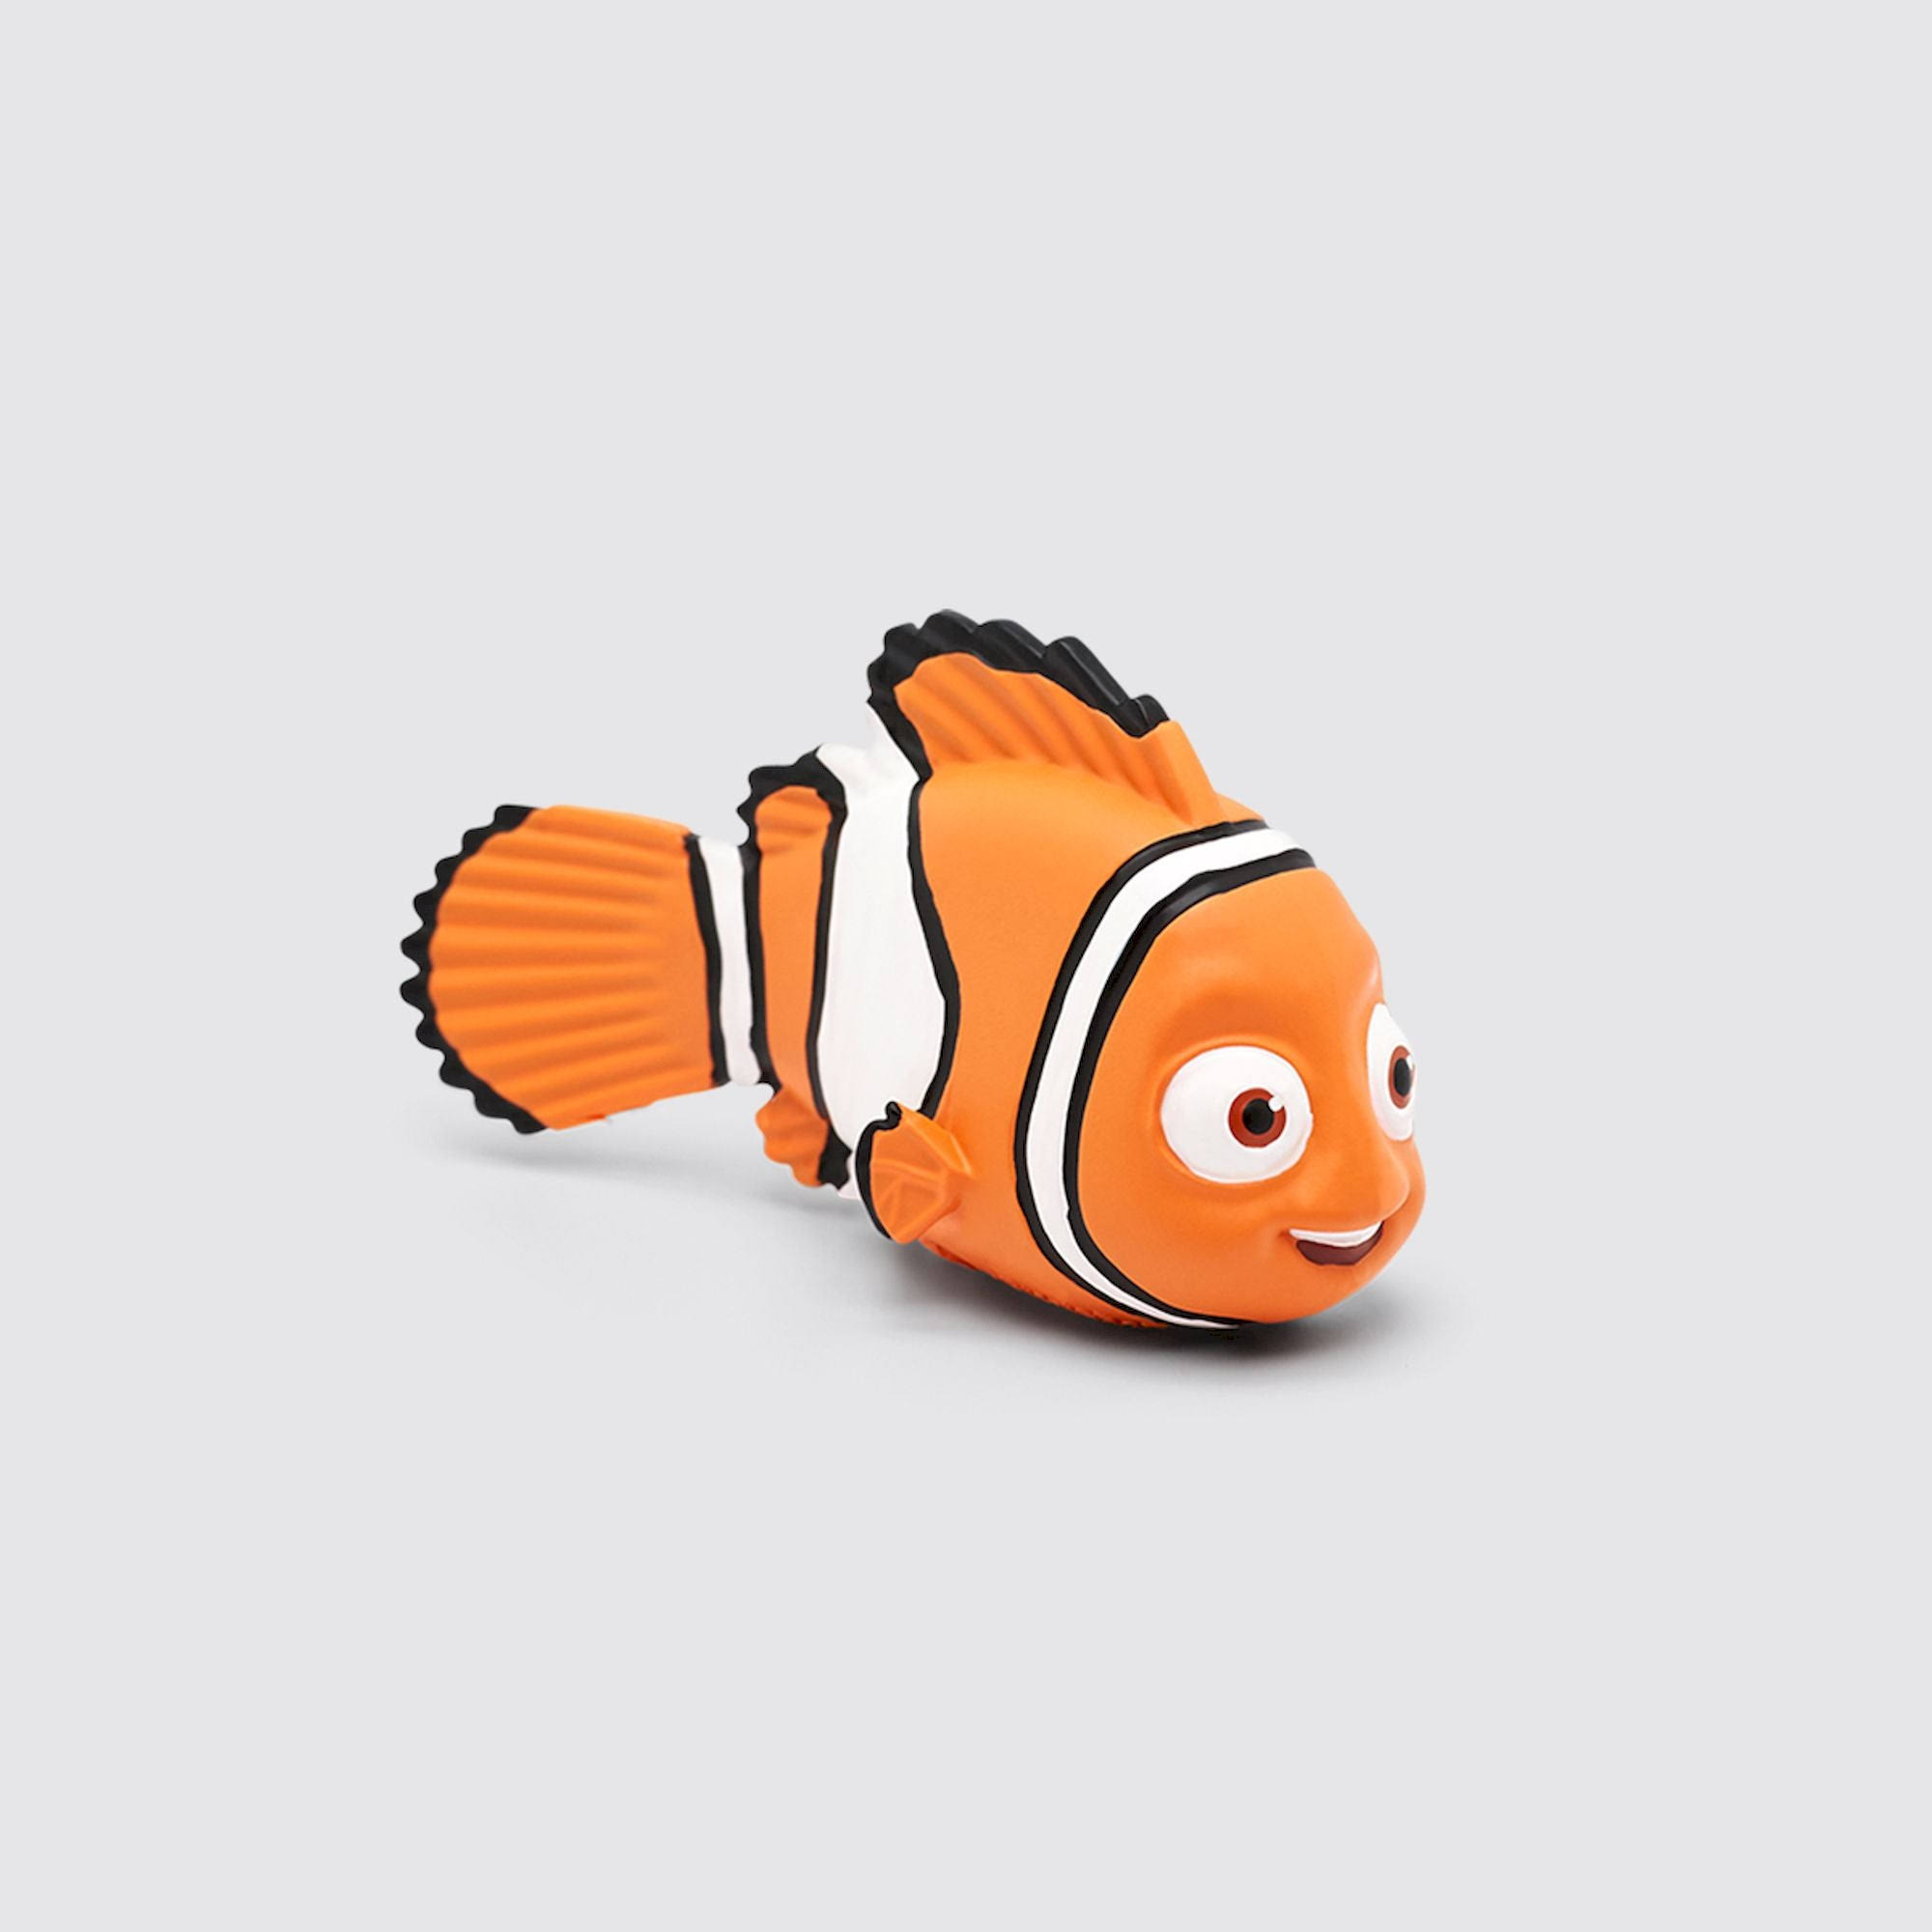 Tonies Nemo Audio Play Character From Disney And Pixar's Finding Nemo